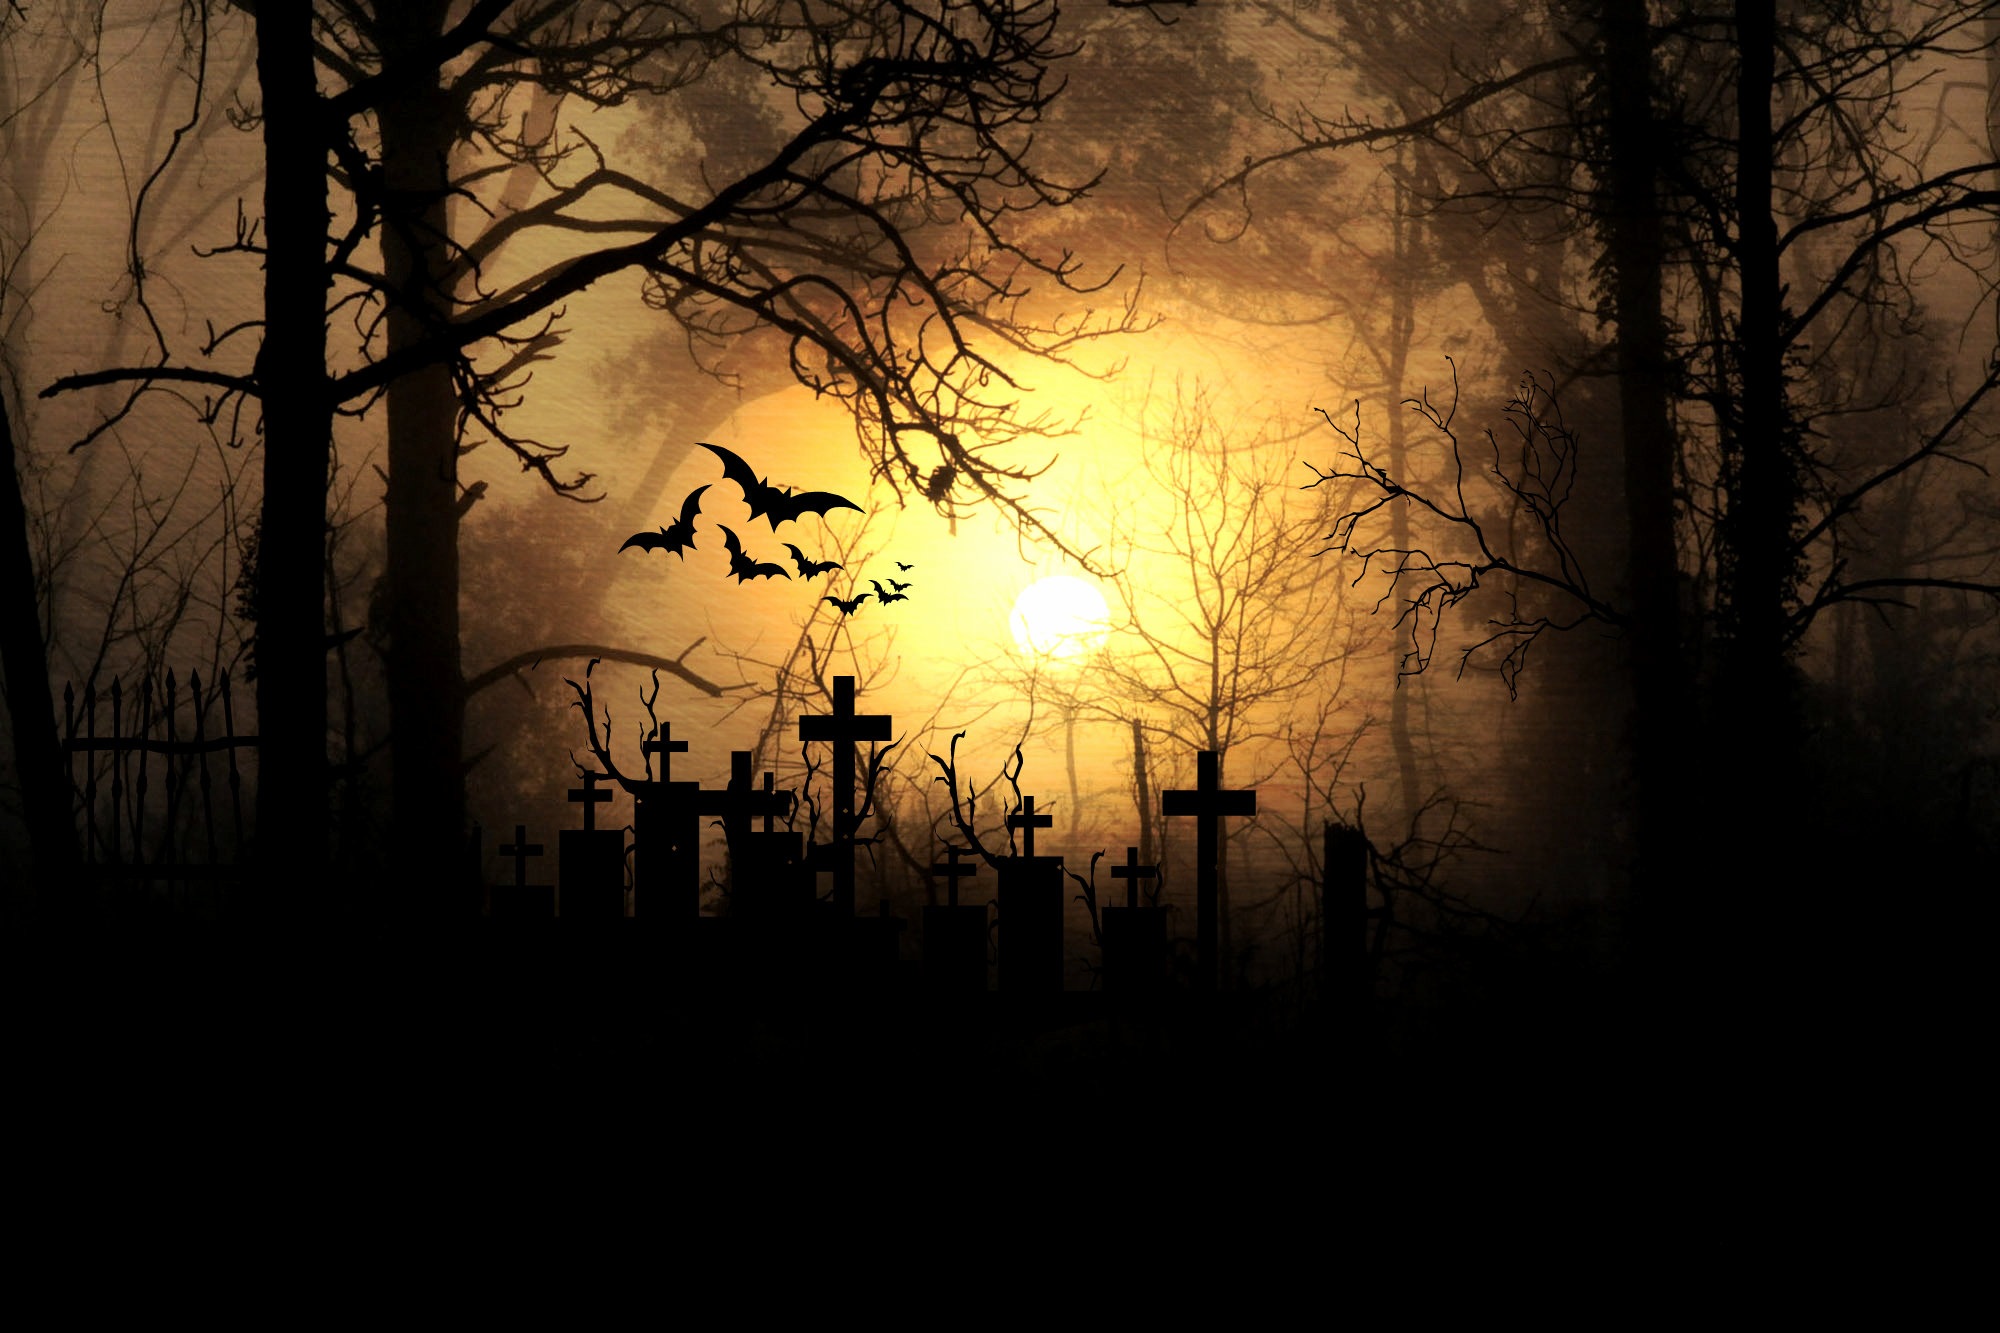 Бесплатное фото Силуэт крестов на фоне света в мрачном лесу